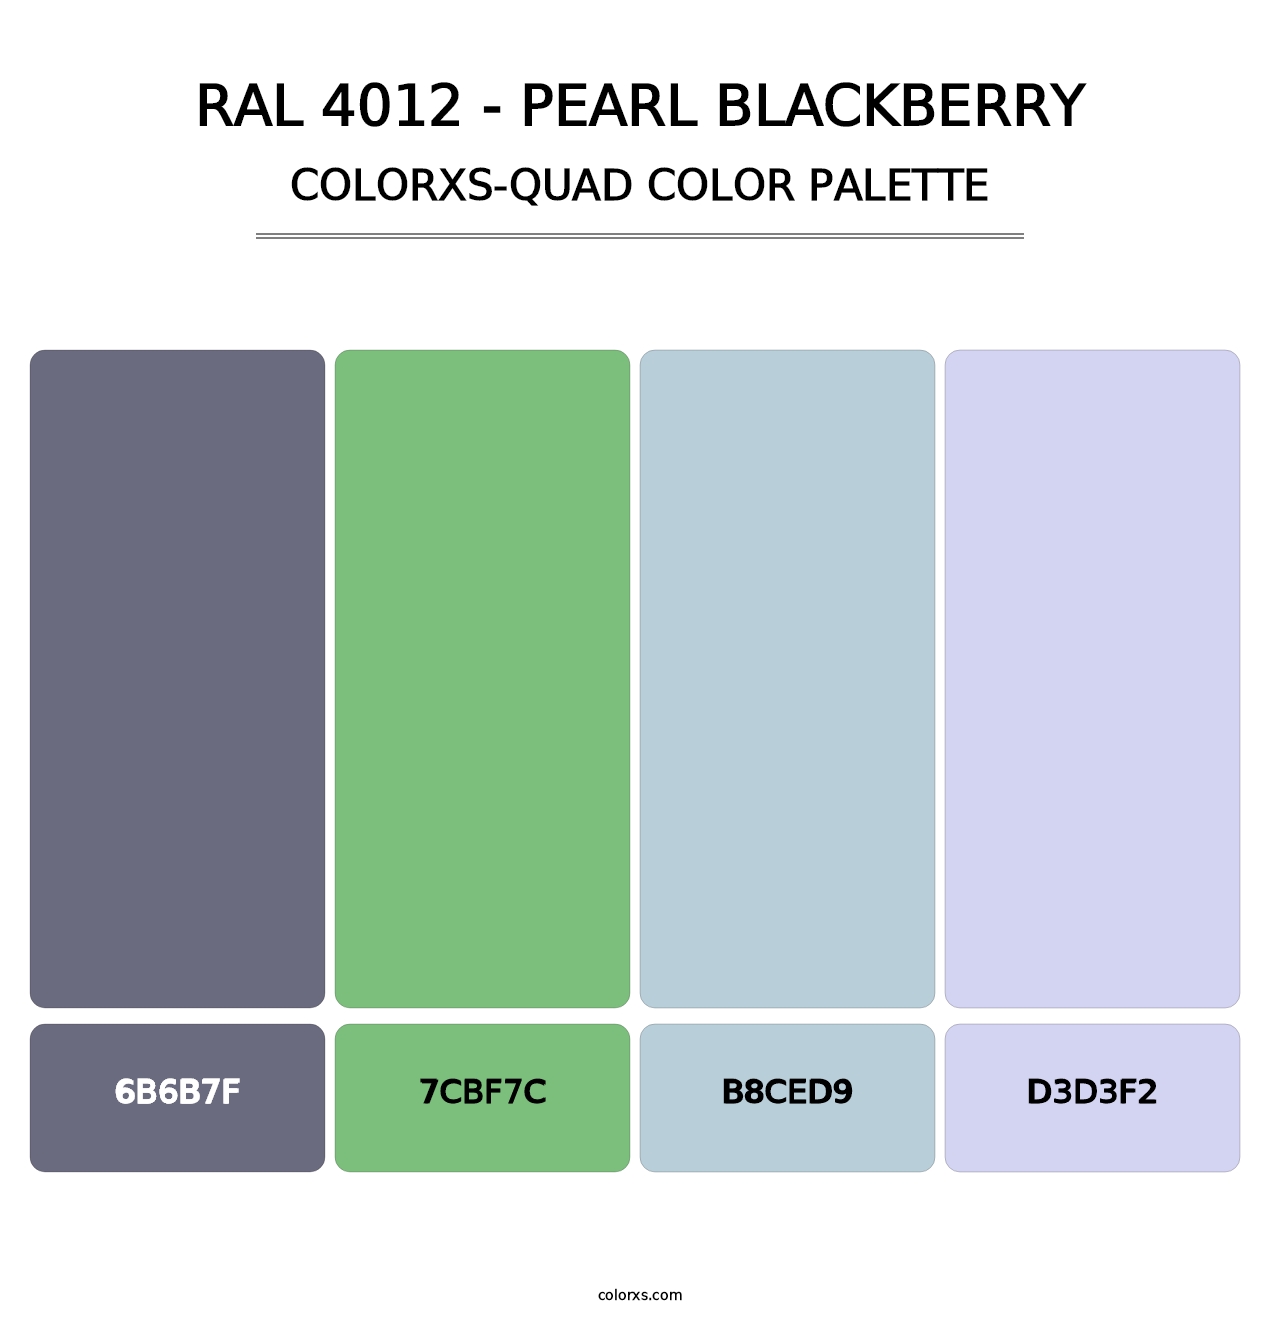 RAL 4012 - Pearl Blackberry - Colorxs Quad Palette